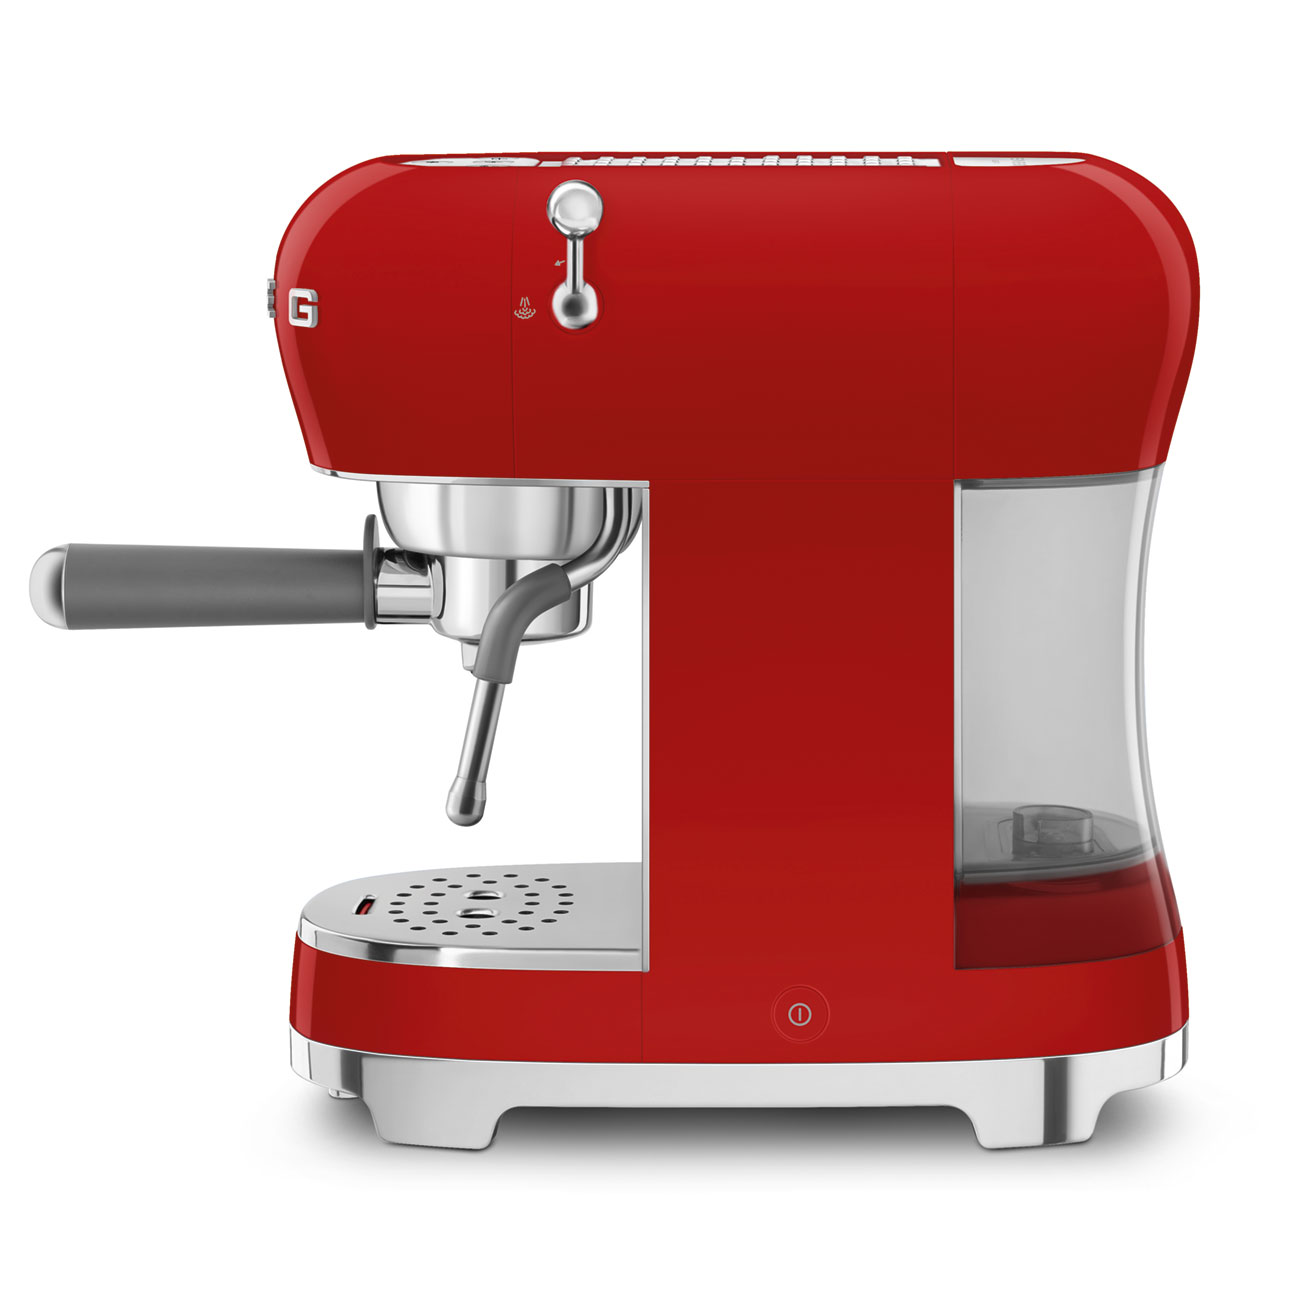 Smeg Red Espresso Manual Coffee Machine with Steam Wand_2